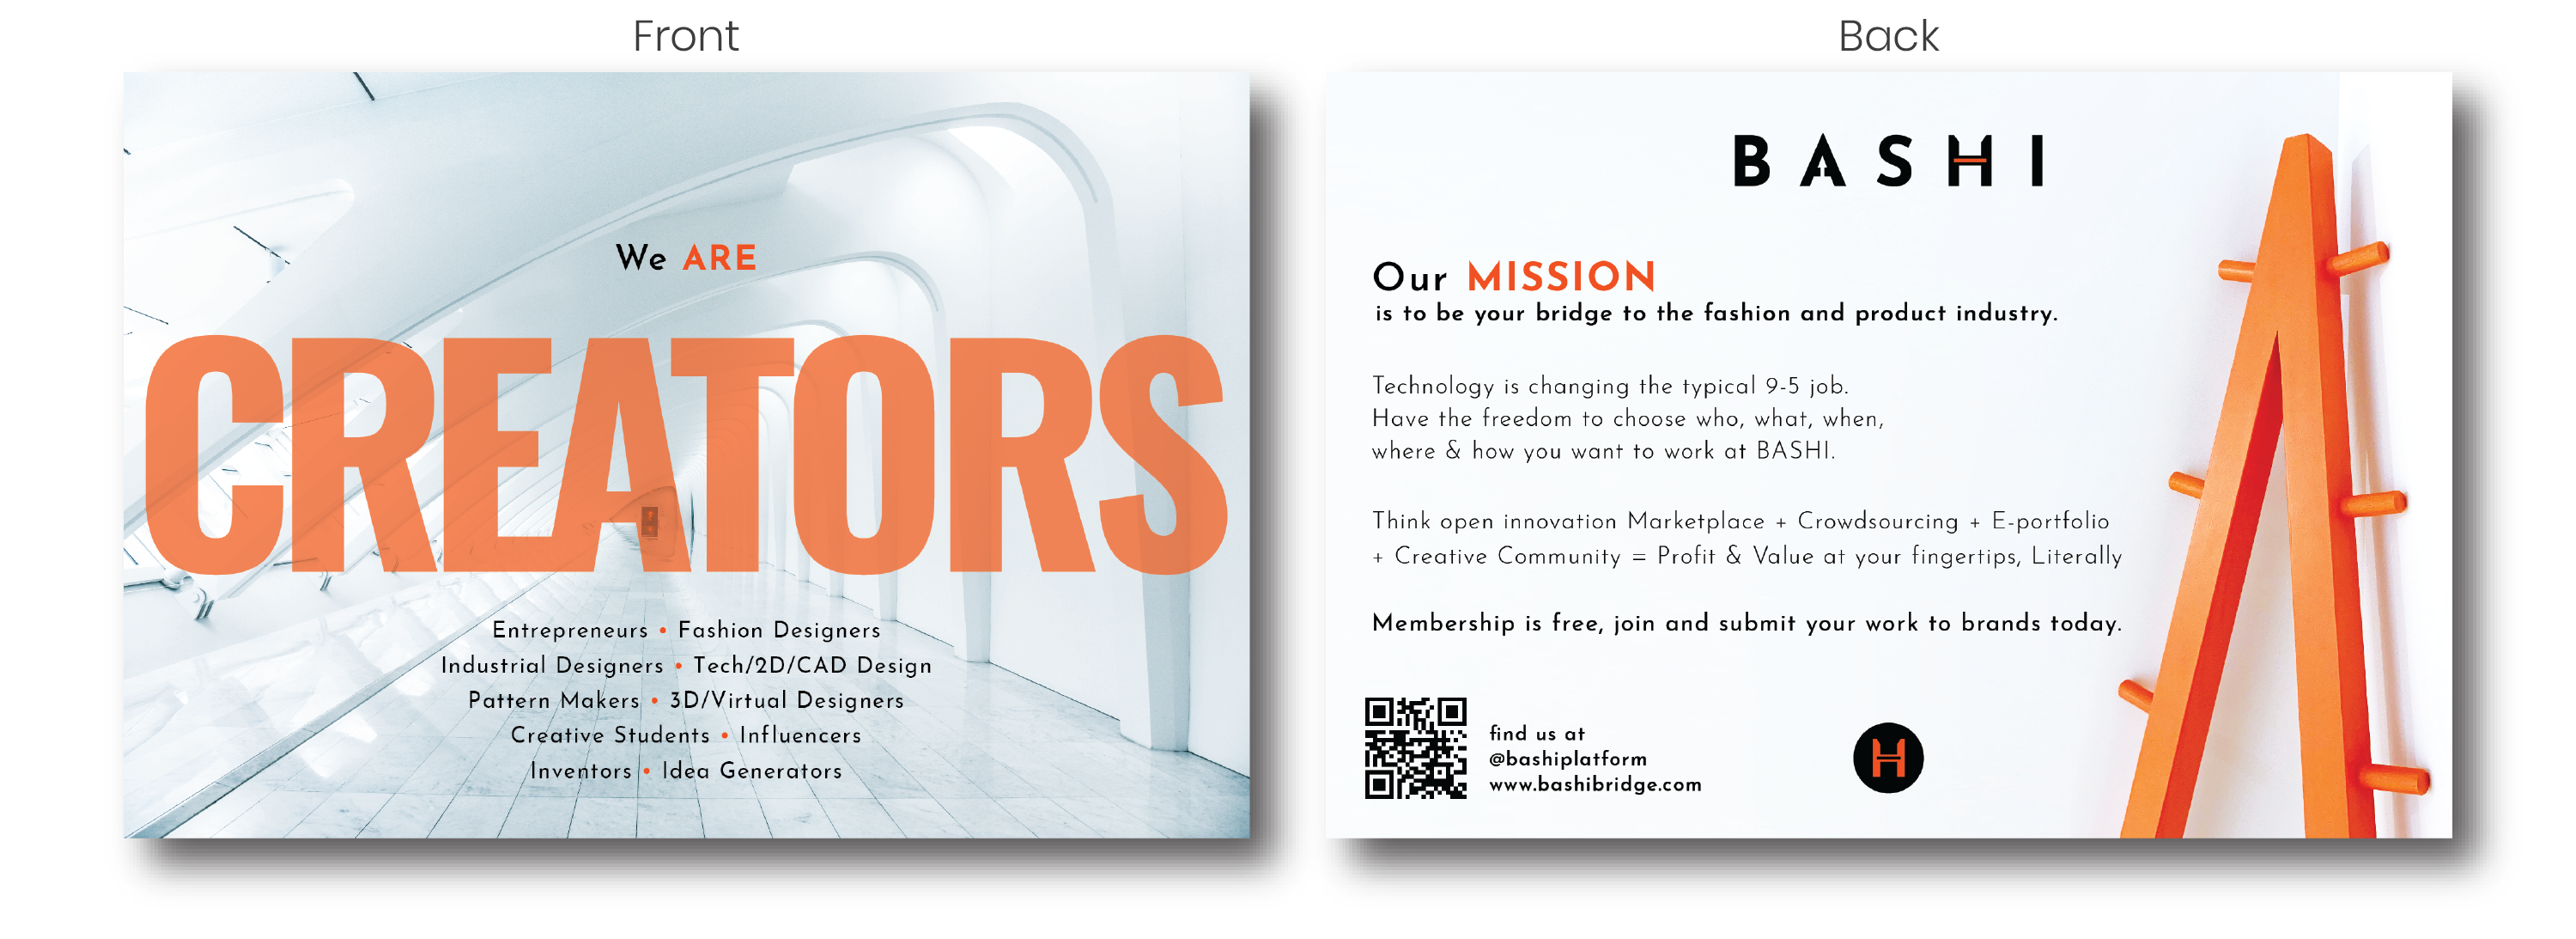 Marketing Materials - Platform Postcard